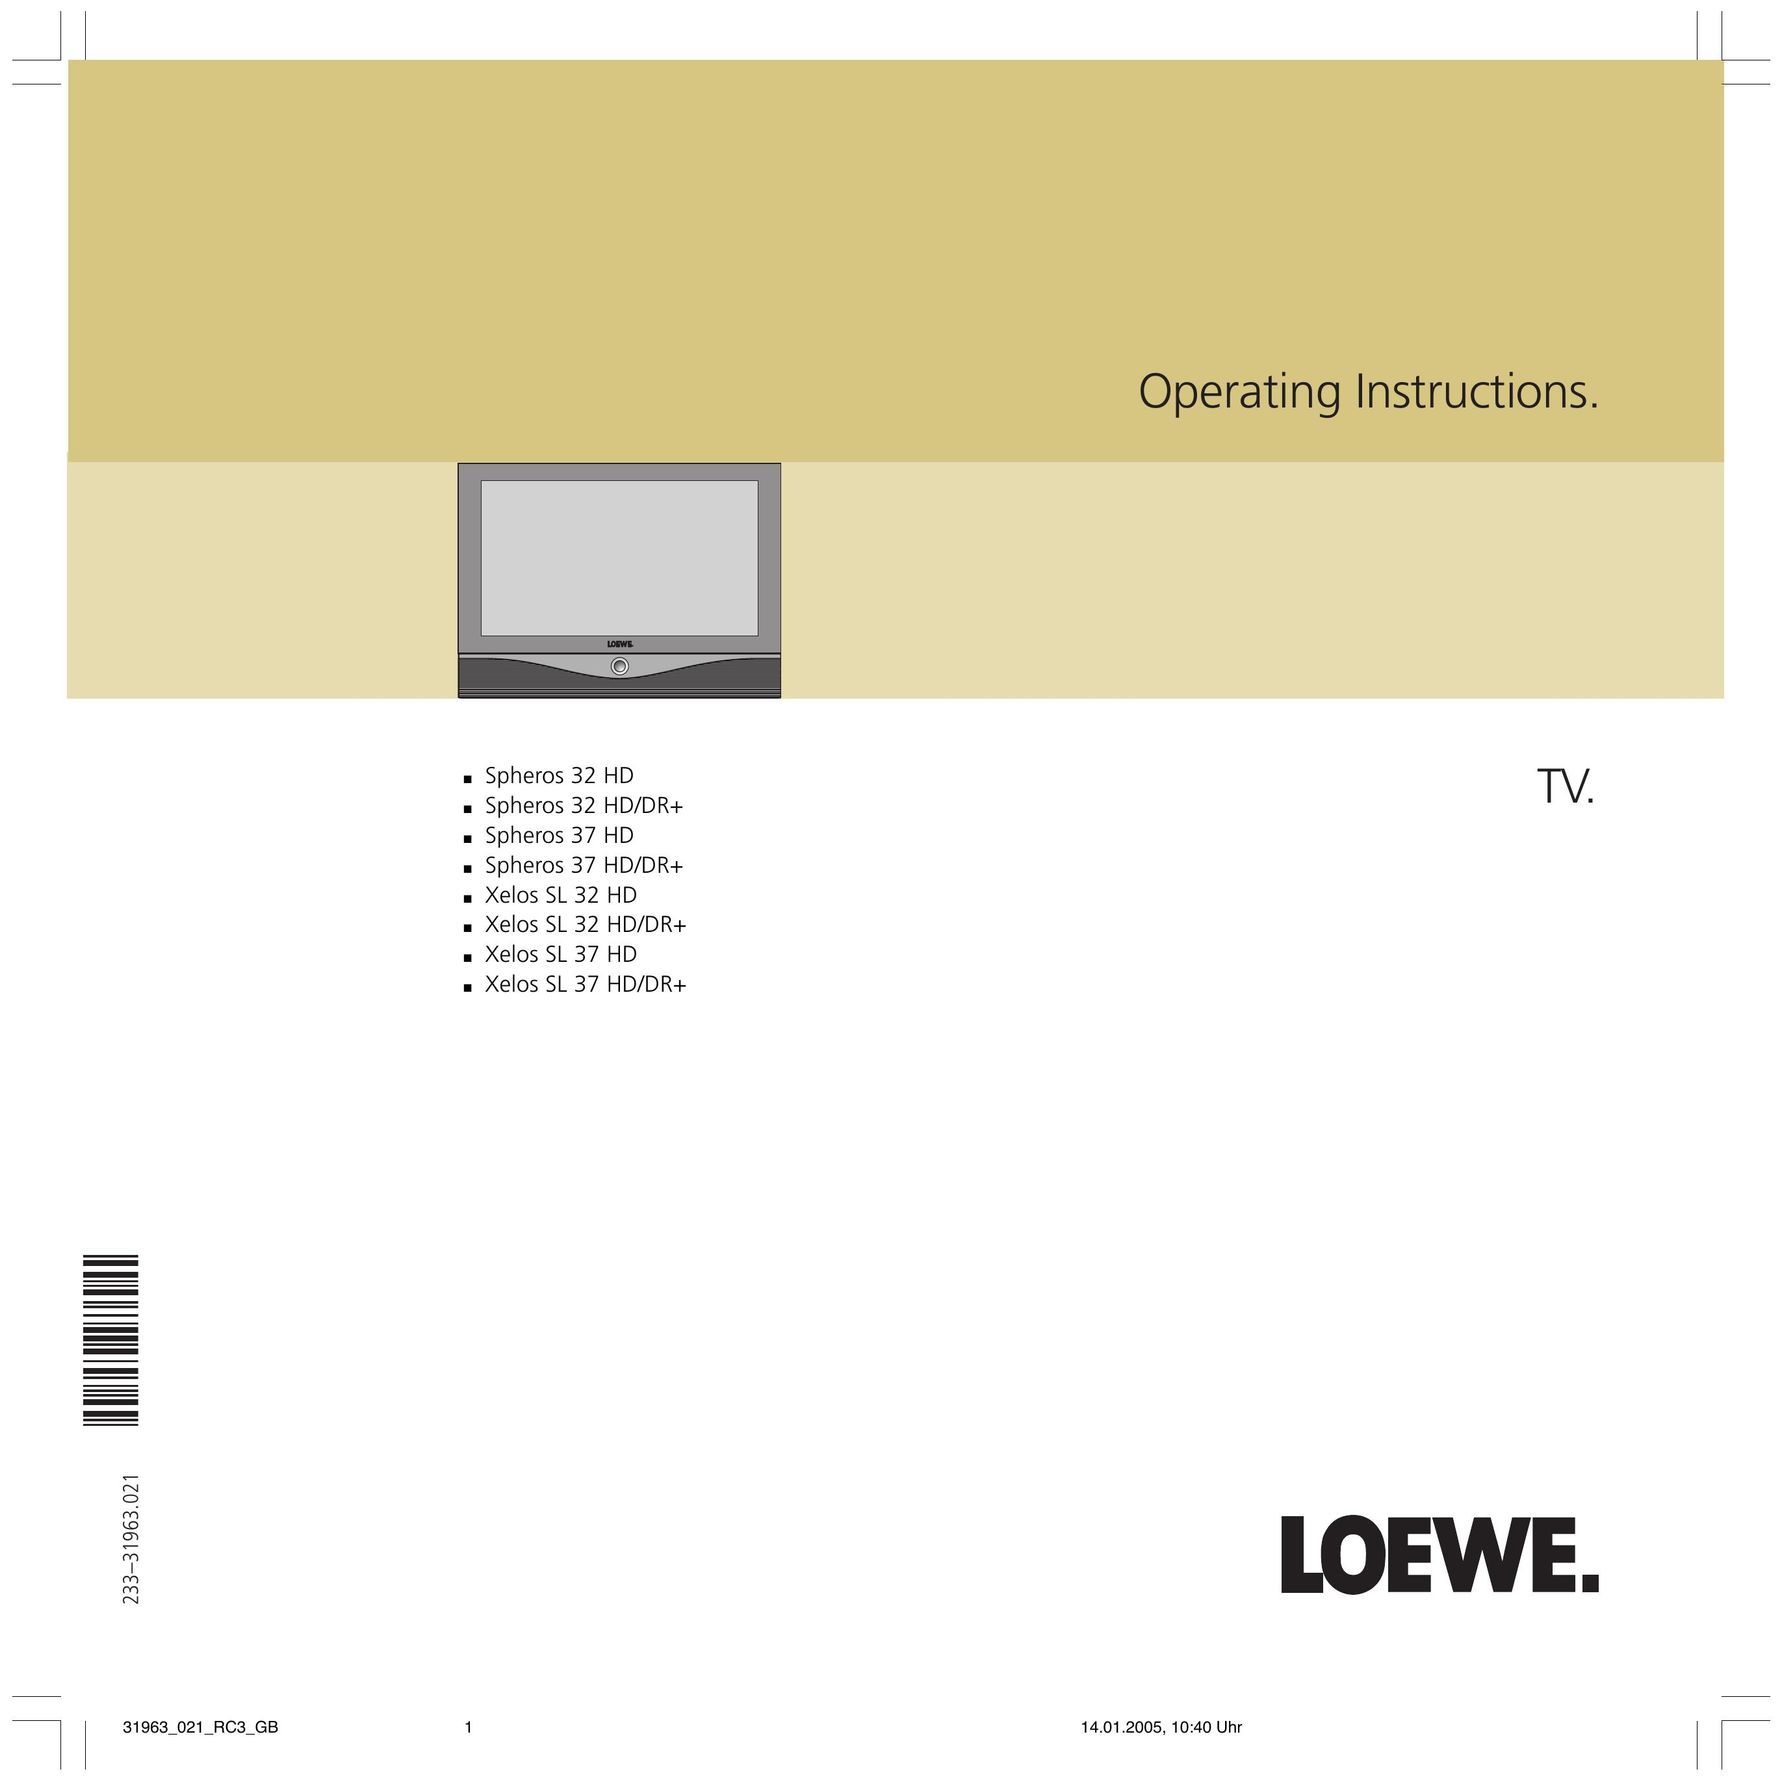 Loewe 37HD/DR+ Flat Panel Television User Manual